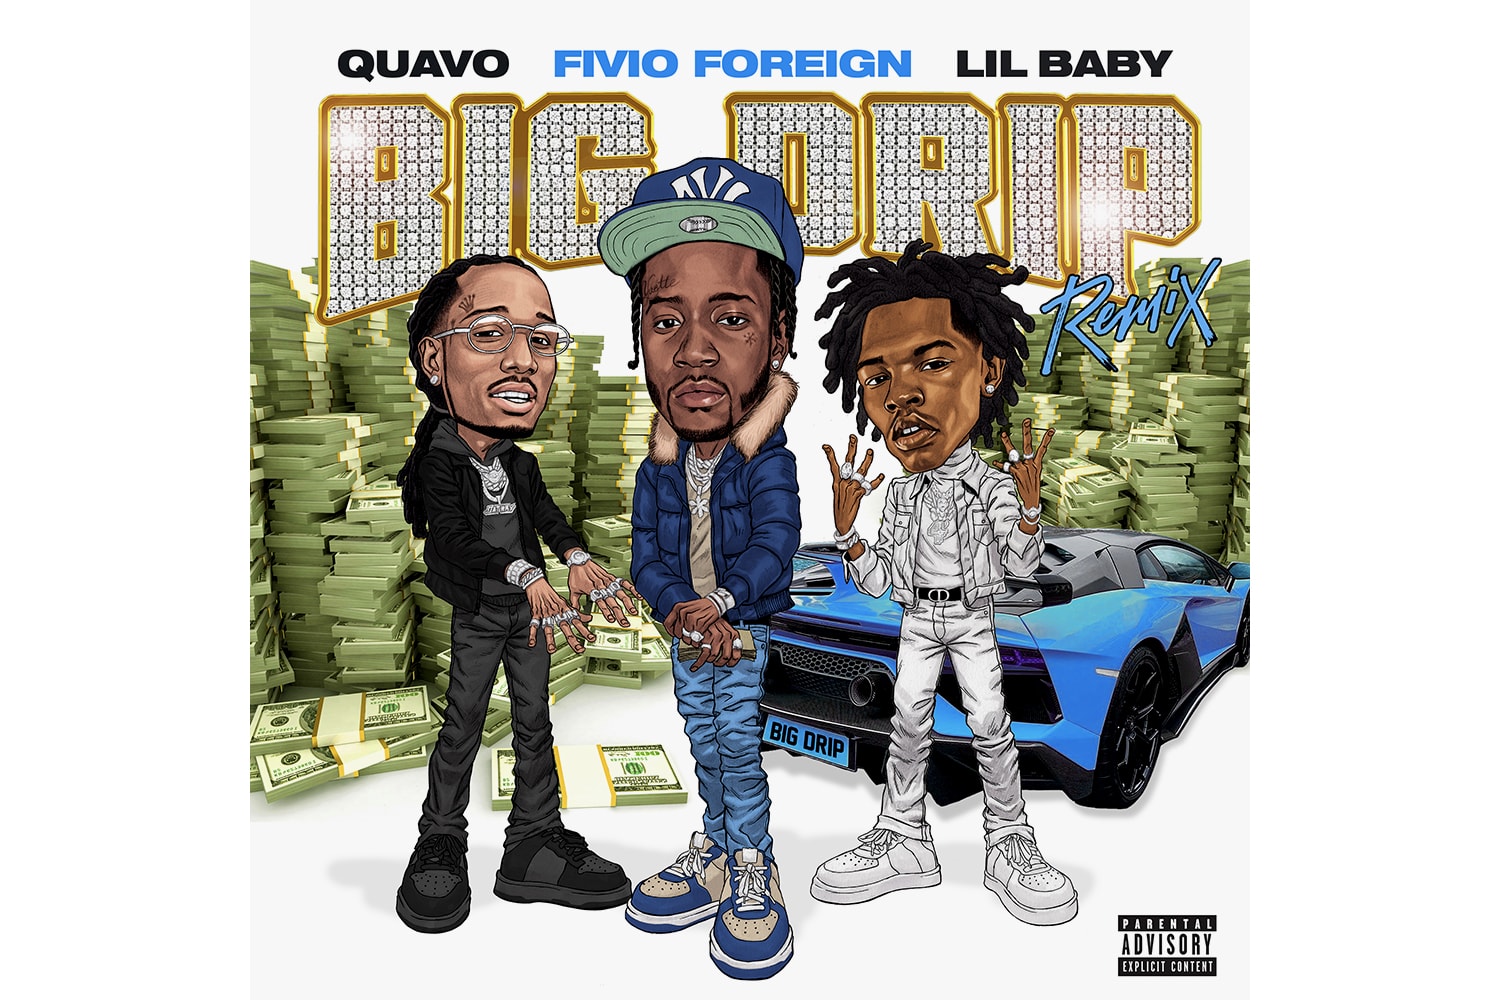 Fivio Foreign "Big Drip" Remix Feat. Quavo & Lil Baby hip-hop rap atlanta trap nyc brooklyn drill spotify apple music listen now 